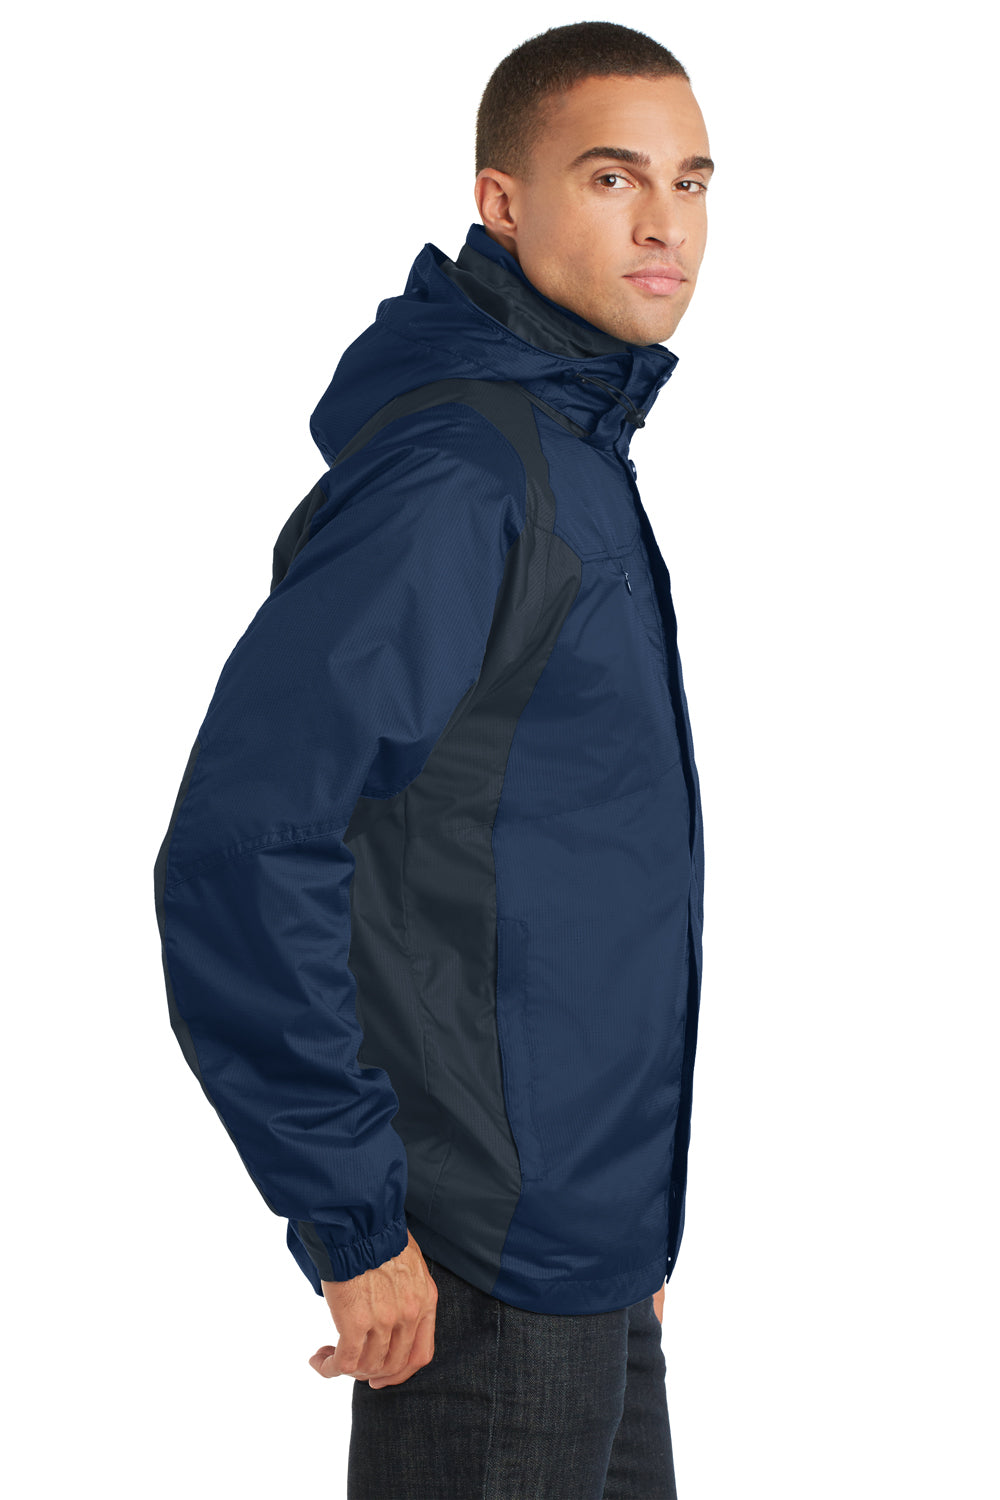 Port Authority J310 Mens Ranger 3-in-1 Waterproof Full Zip Hooded Jacket Insignia Blue/Navy Blue Side